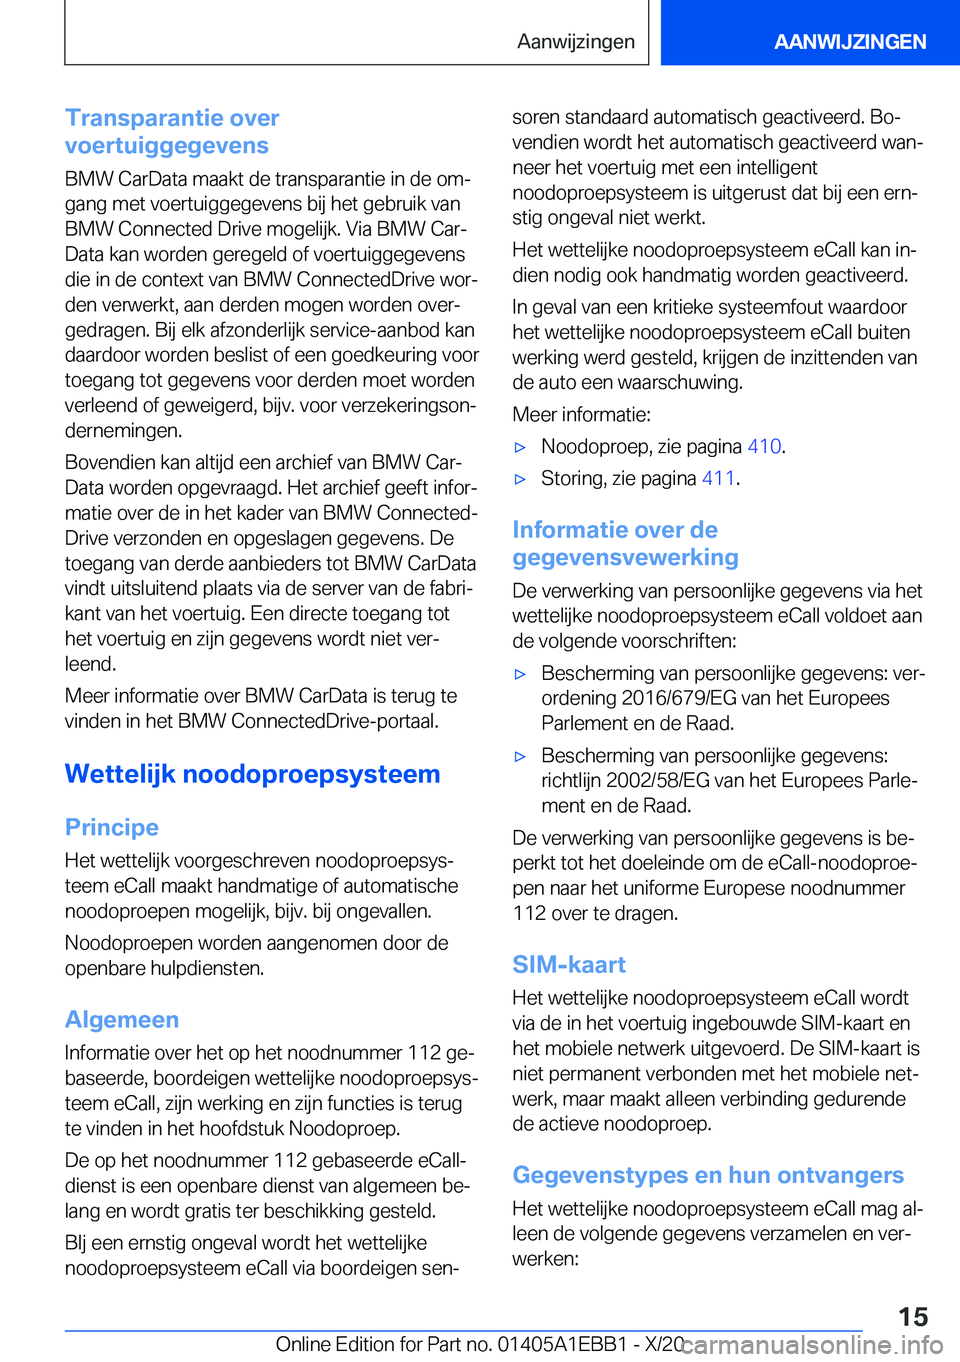 BMW 3 SERIES 2021  Instructieboekjes (in Dutch) �T�r�a�n�s�p�a�r�a�n�t�i�e��o�v�e�r
�v�o�e�r�t�u�i�g�g�e�g�e�v�e�n�s
�B�M�W��C�a�r�D�a�t�a��m�a�a�k�t��d�e��t�r�a�n�s�p�a�r�a�n�t�i�e��i�n��d�e��o�mj
�g�a�n�g��m�e�t��v�o�e�r�t�u�i�g�g�e�g�